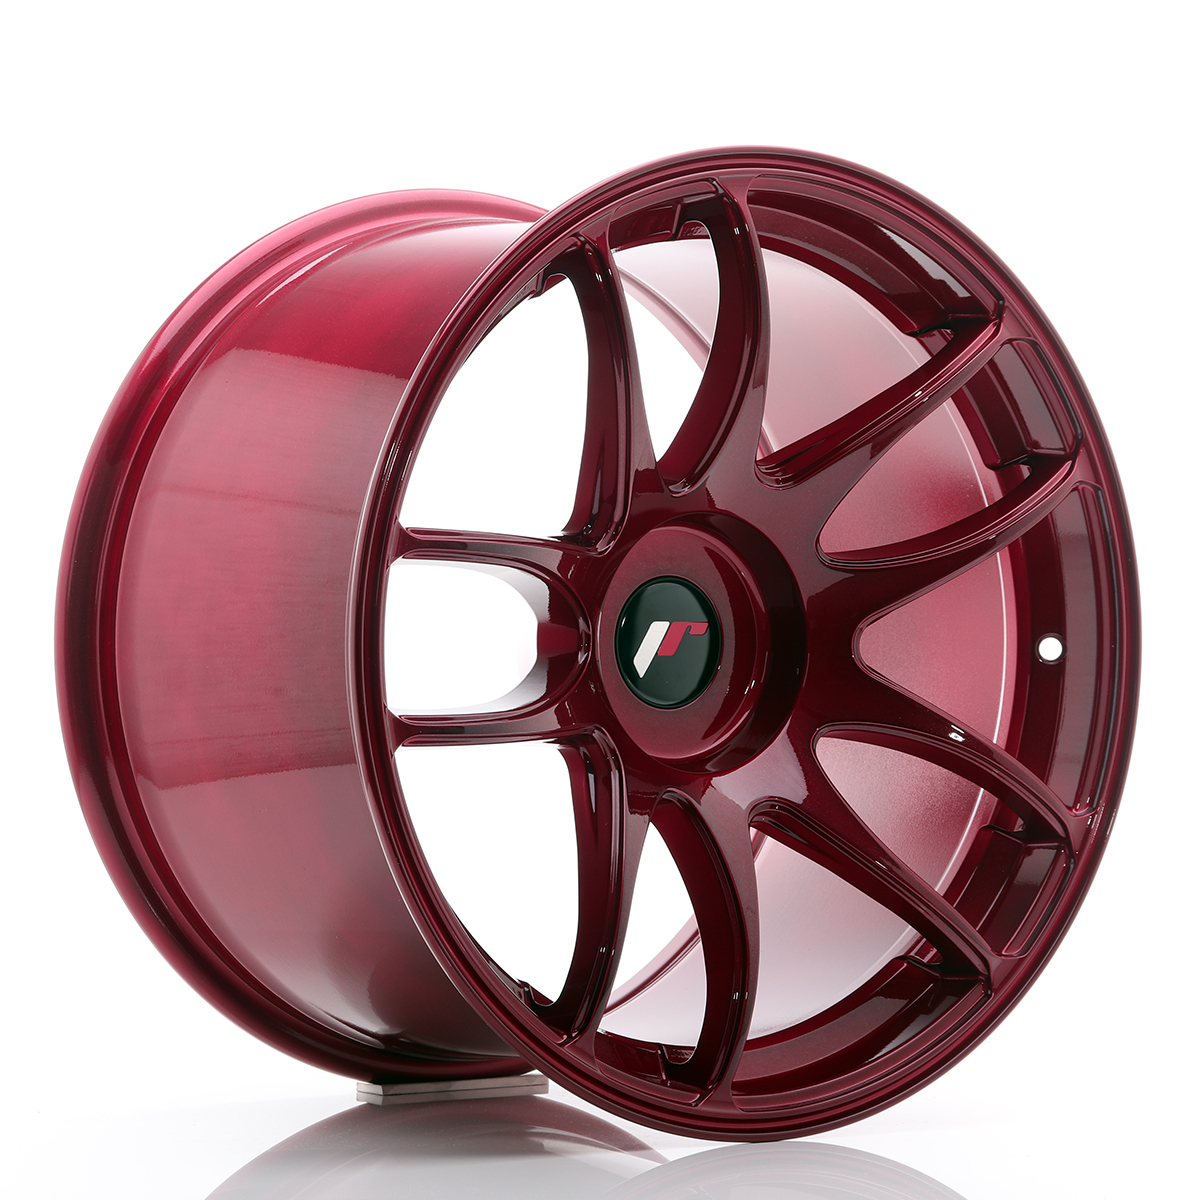 JR Wheels JR29 18x10, 5 ET25-28 BLANK Platinum Red